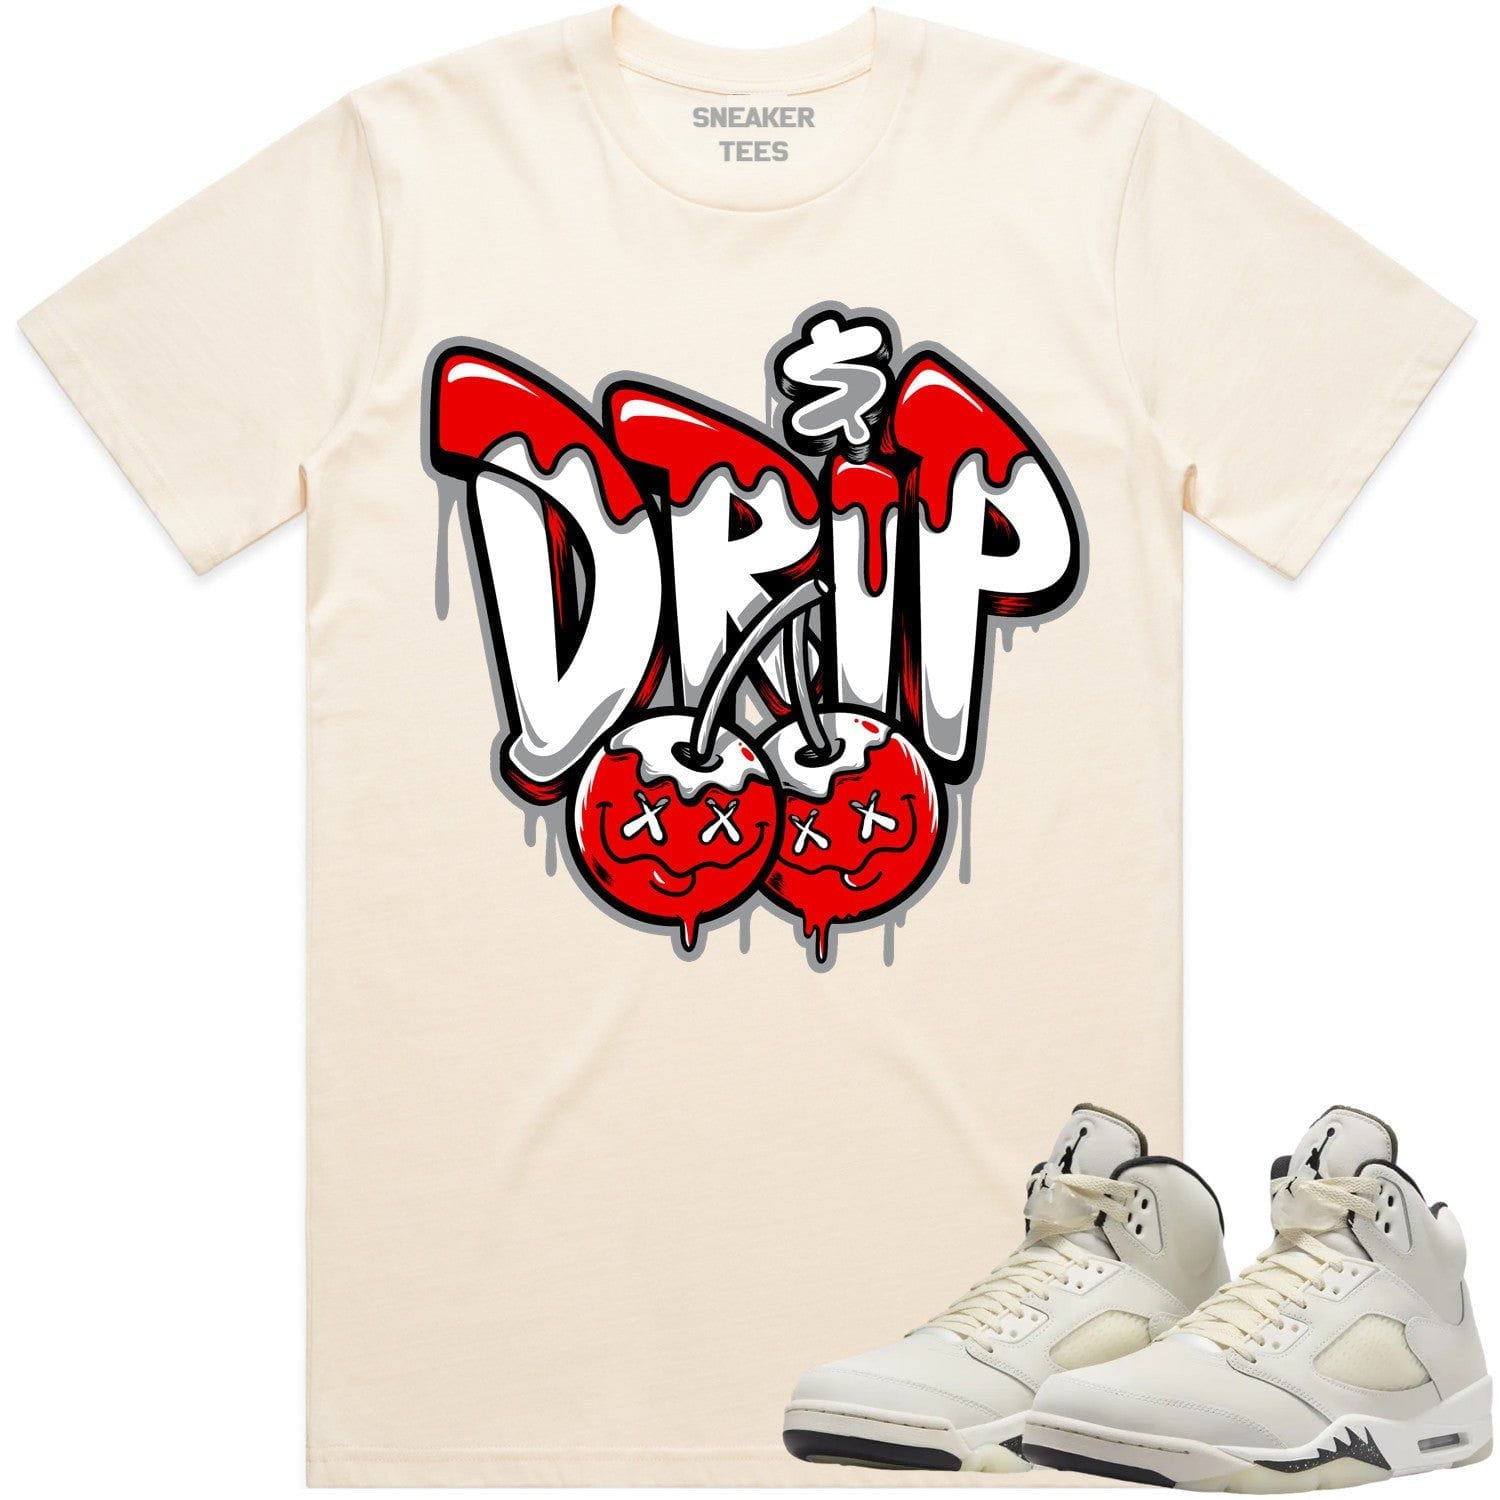 Sail 5s Shirt - Jordan Retro 5 Sail 5s Sneaker Tees - Red Money Drip